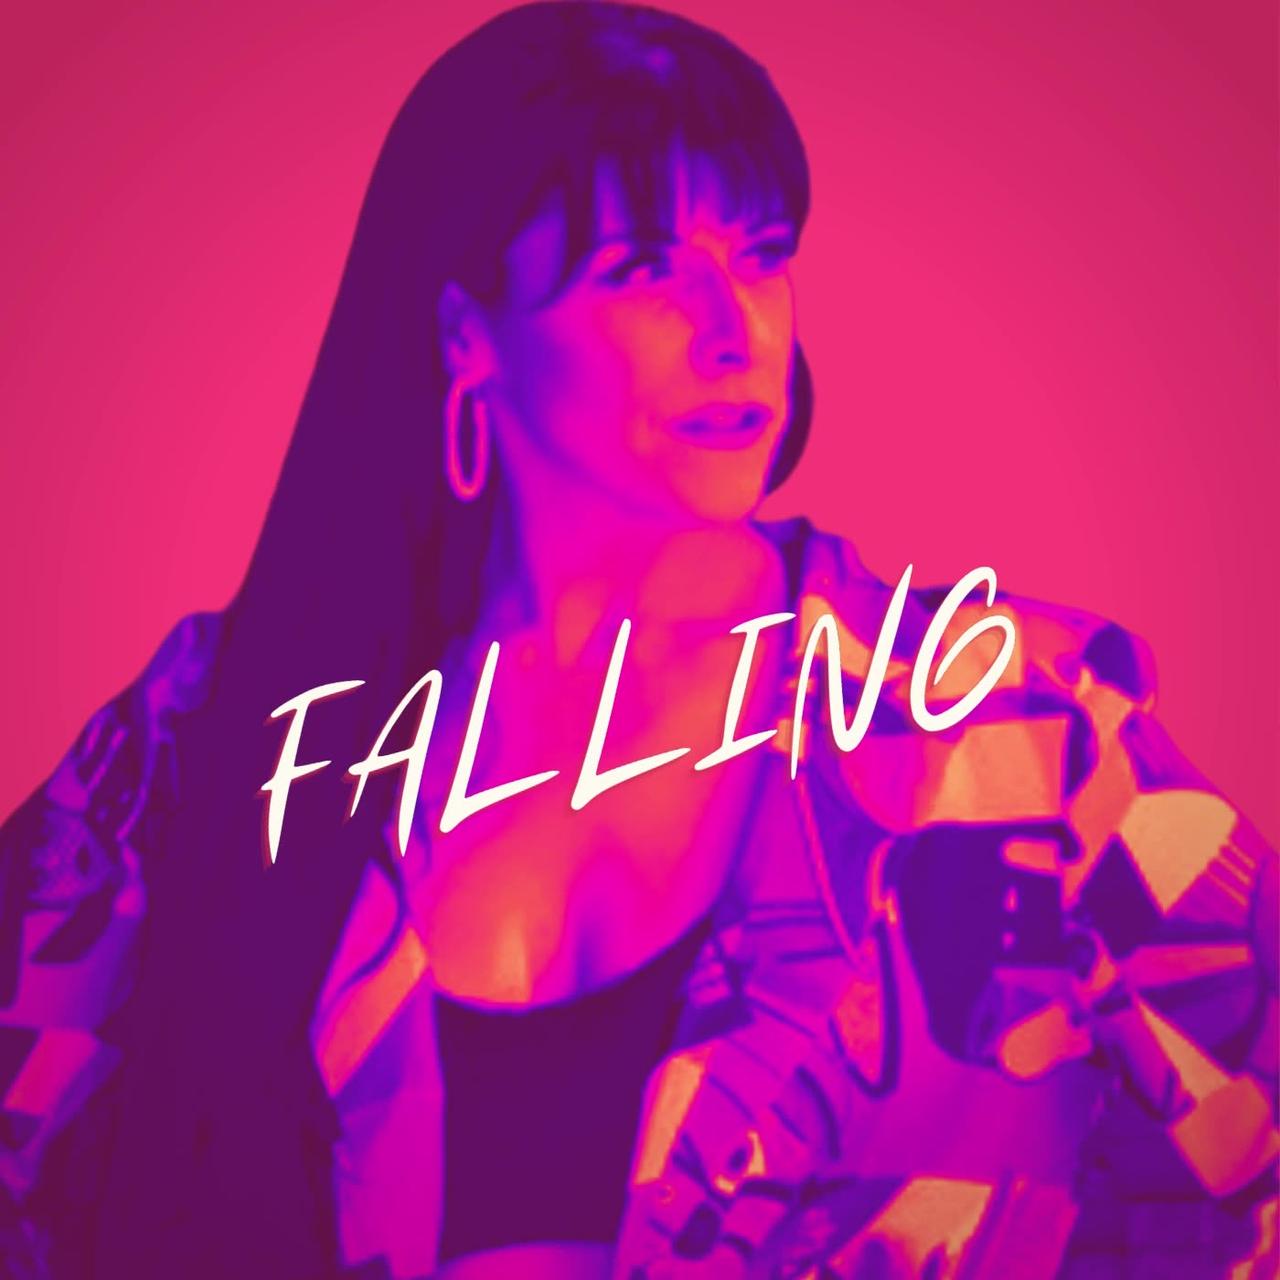 "Falling" by Patrice Peris